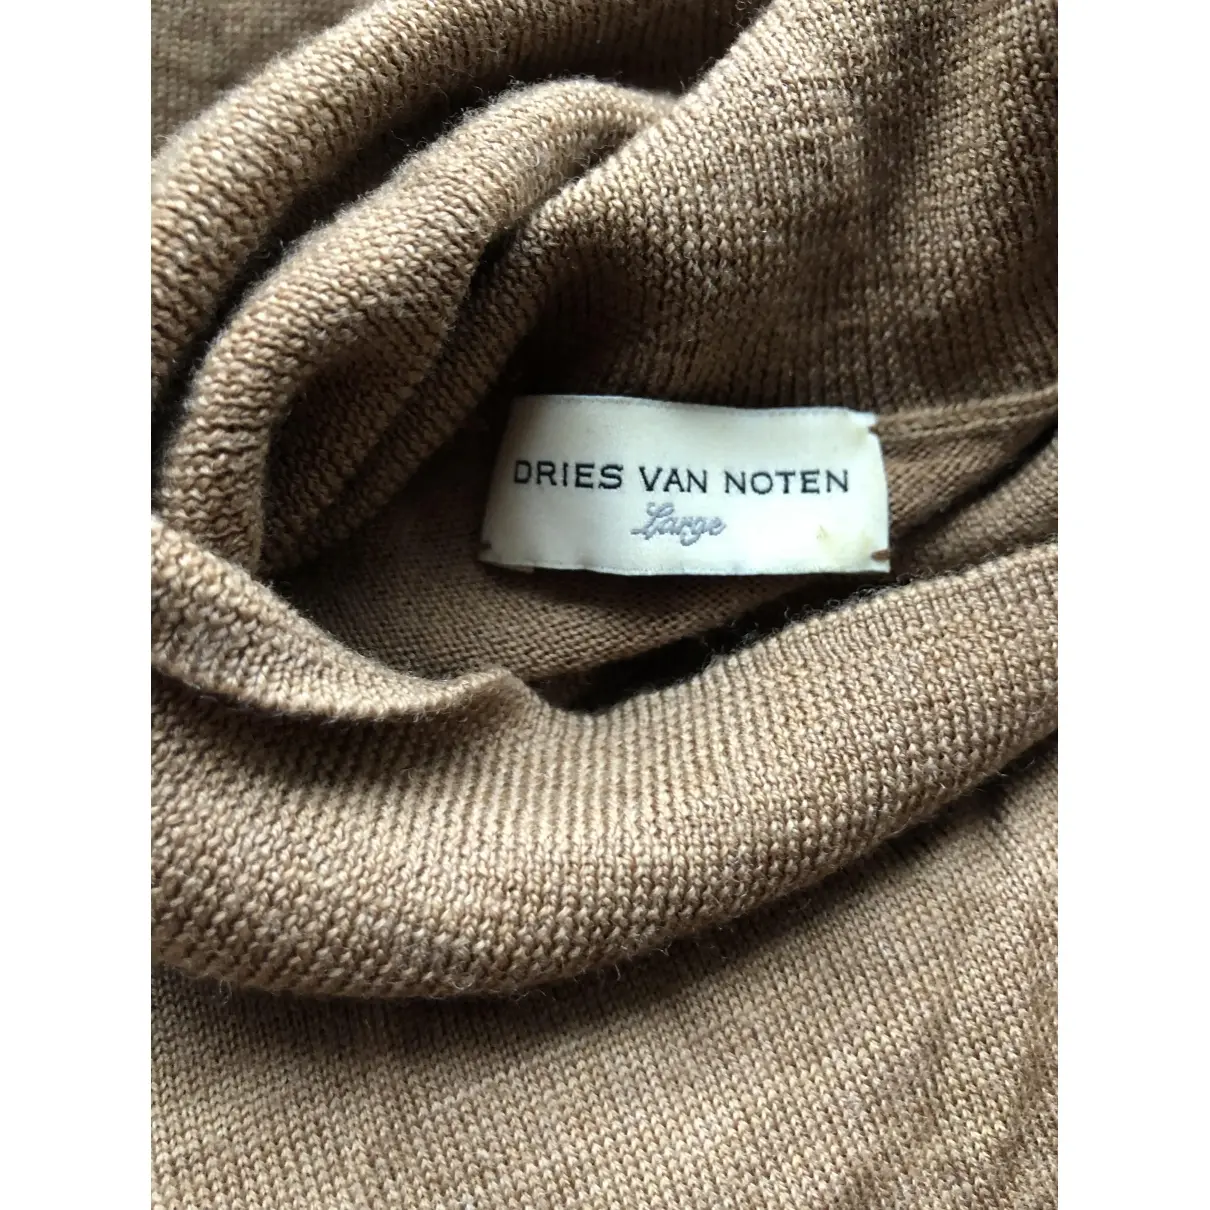 Dries Van Noten Wool pull for sale